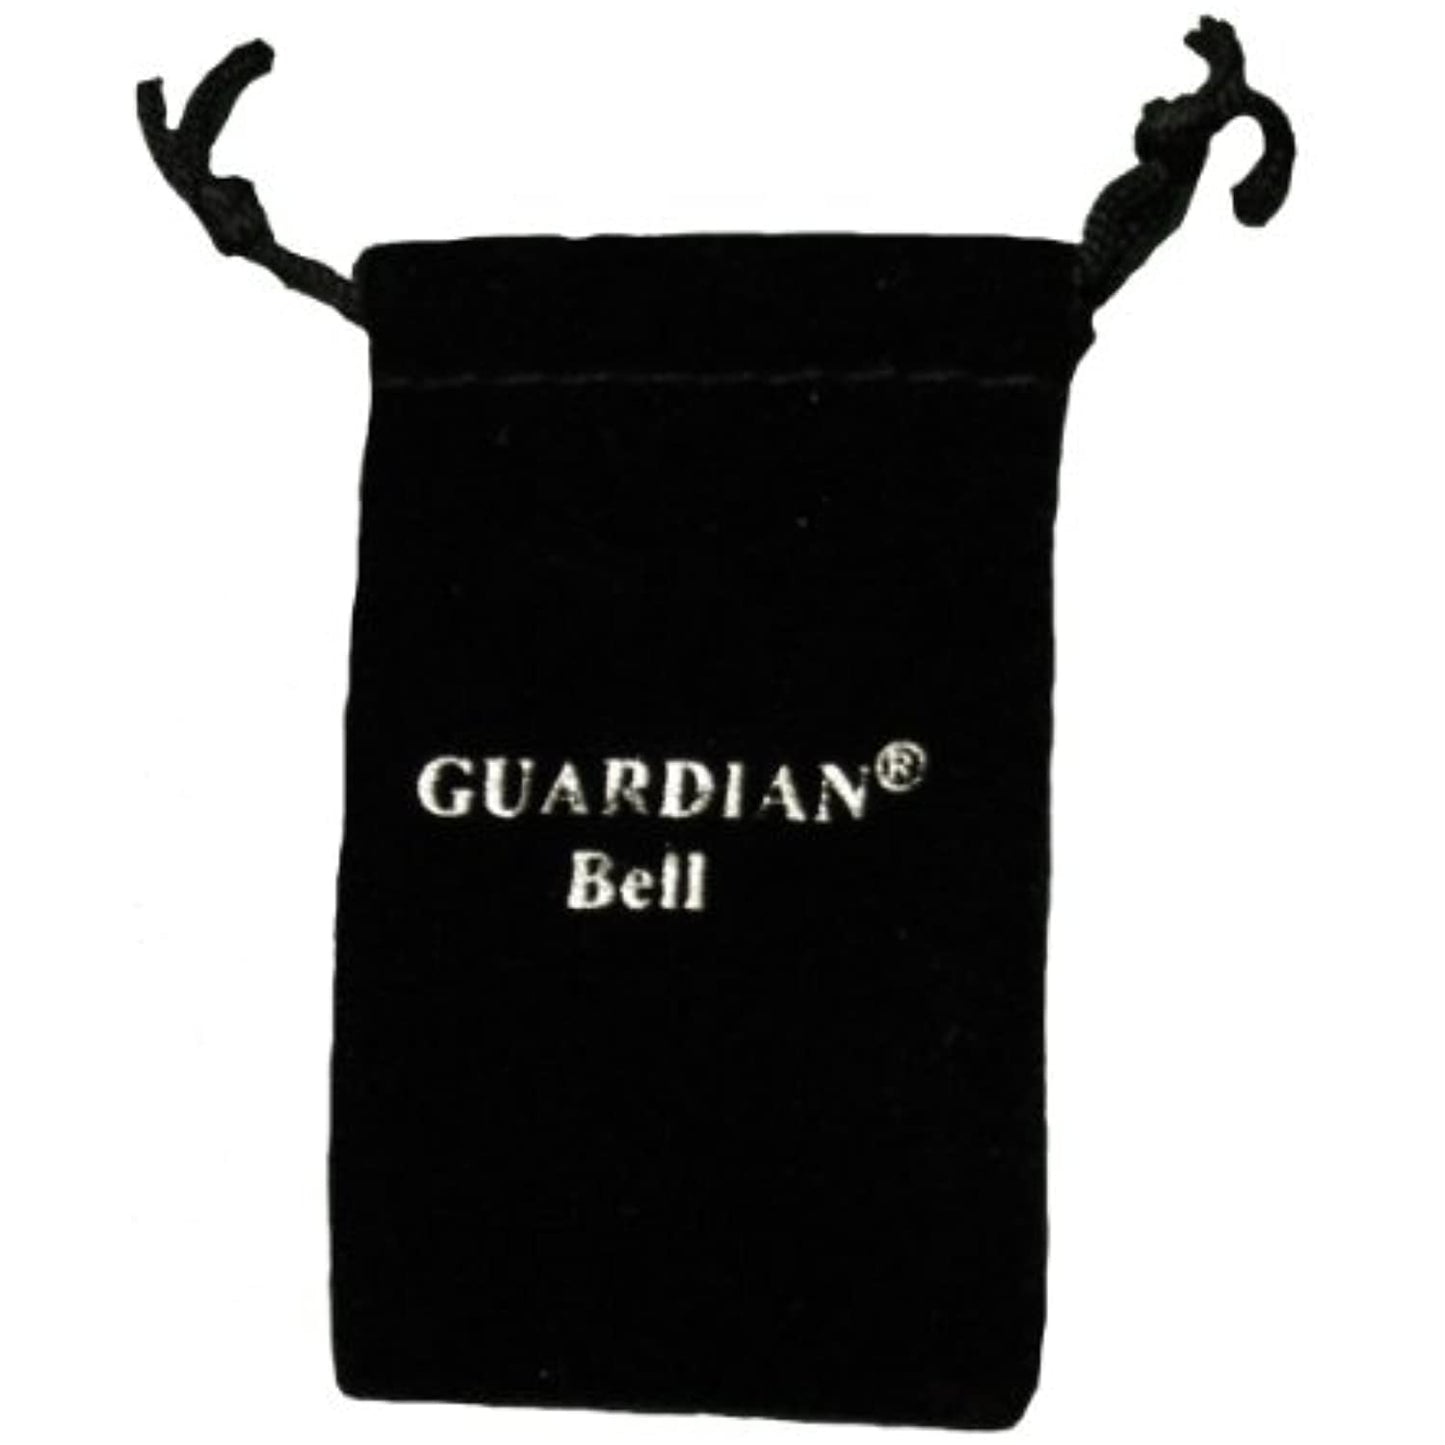 Gladiator Guardian Bell